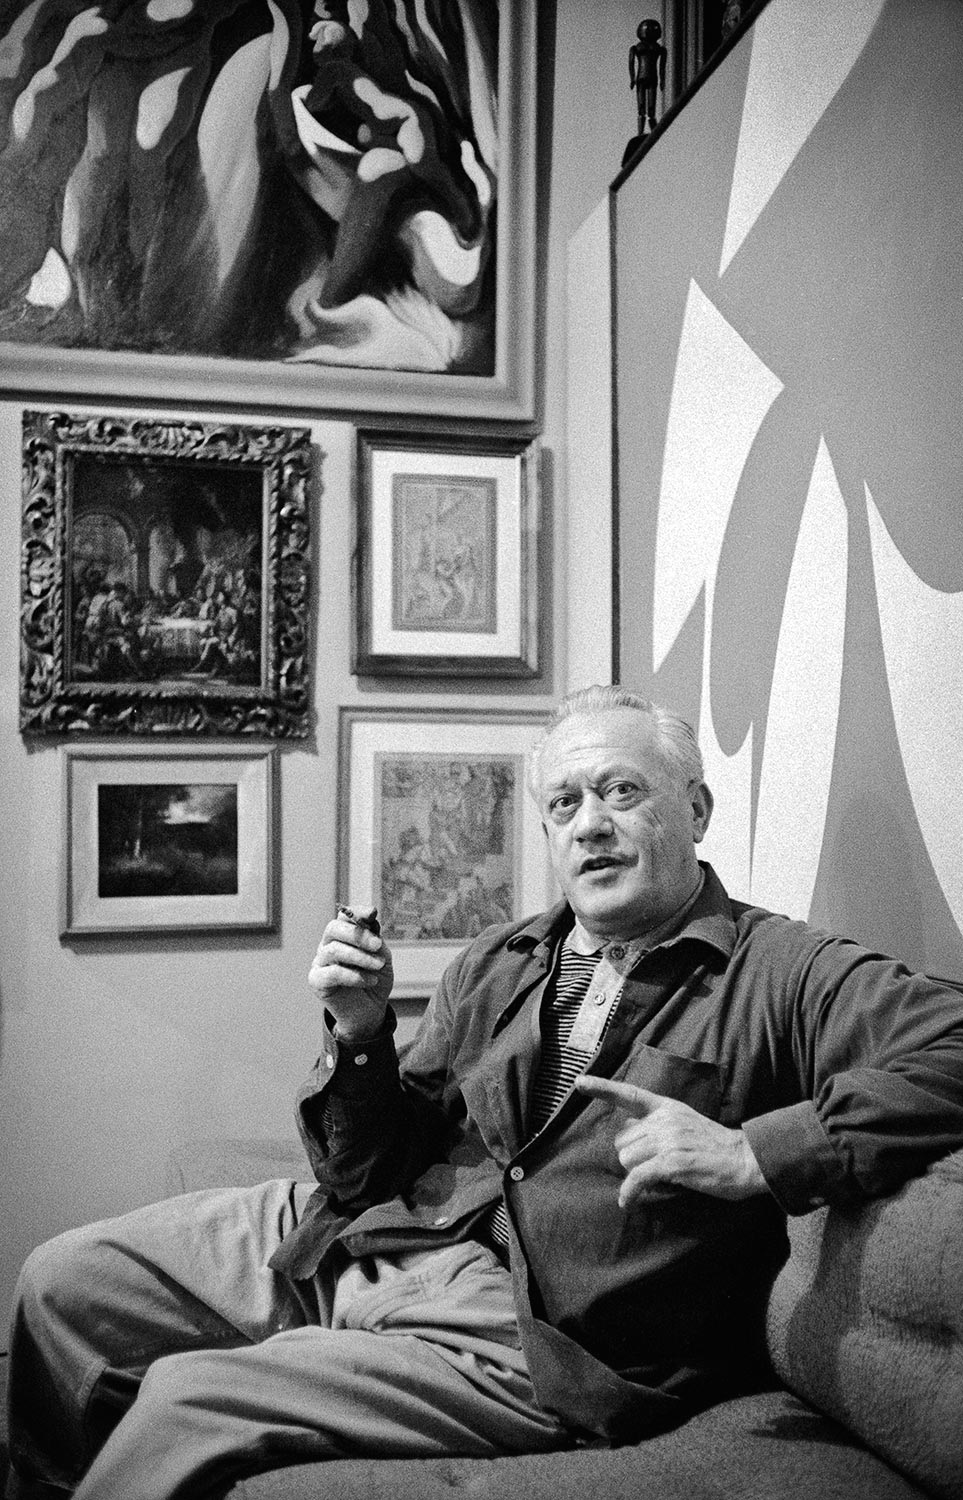  LORSER FEITELSON   In his studio, Los Angeles, California, 1957  